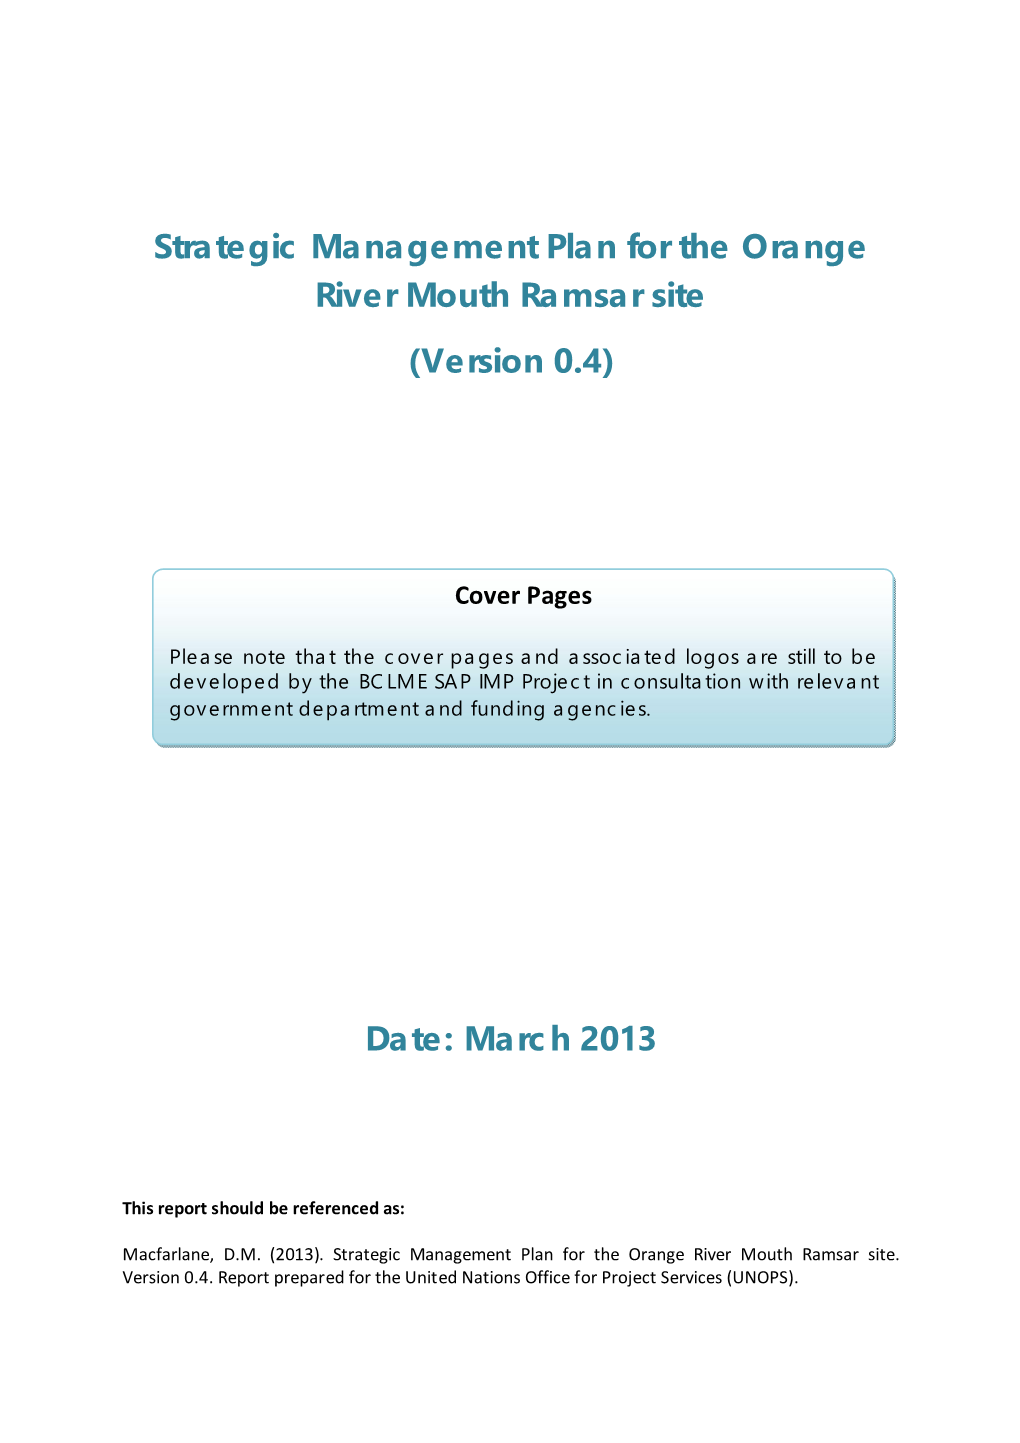 Strategic Management Plan for the Orange River Mouth Ramsar Site (Version 0.4)